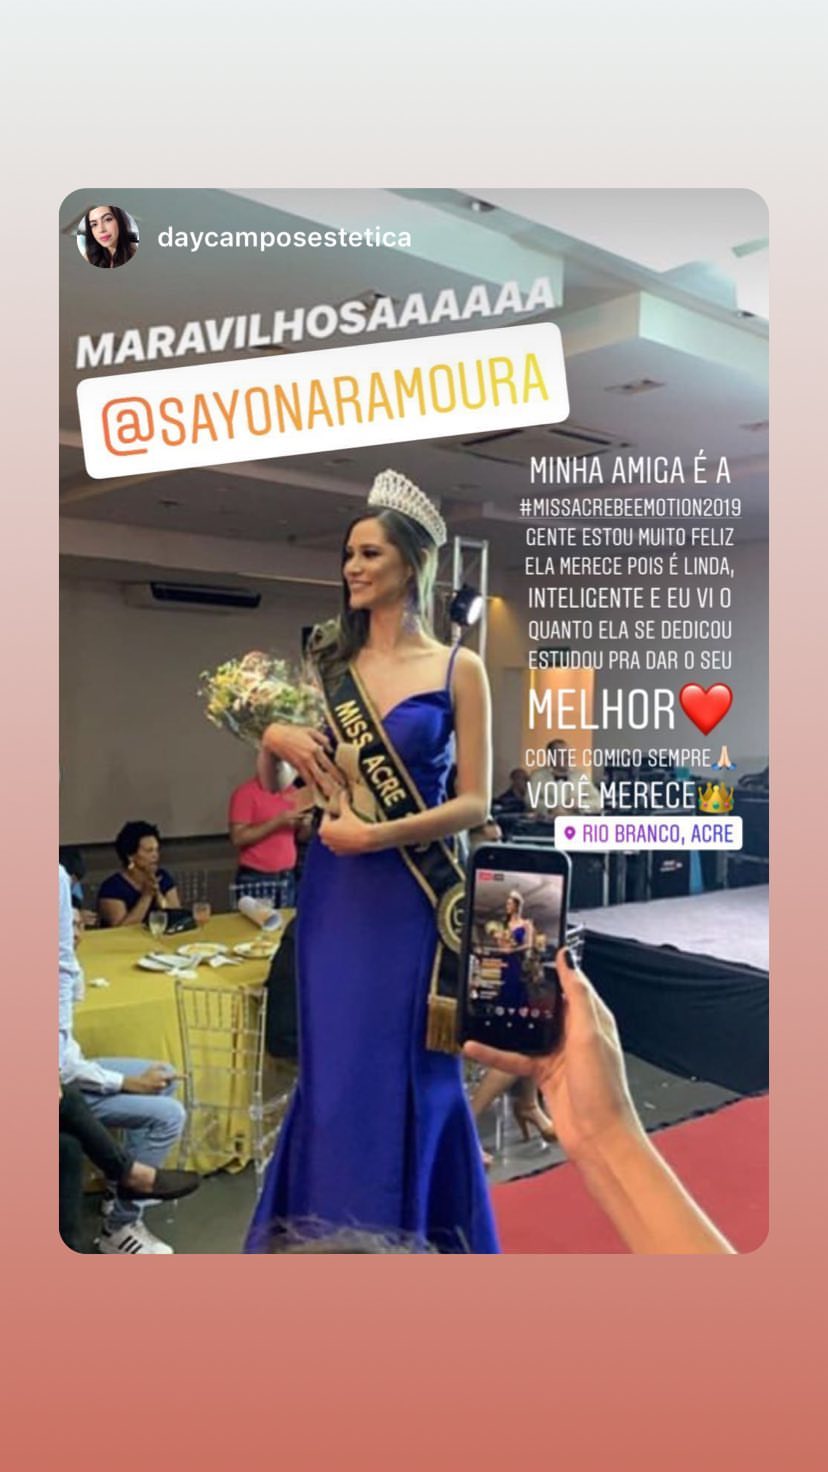 sayonara moura, miss acre 2019. - Página 2 49833611